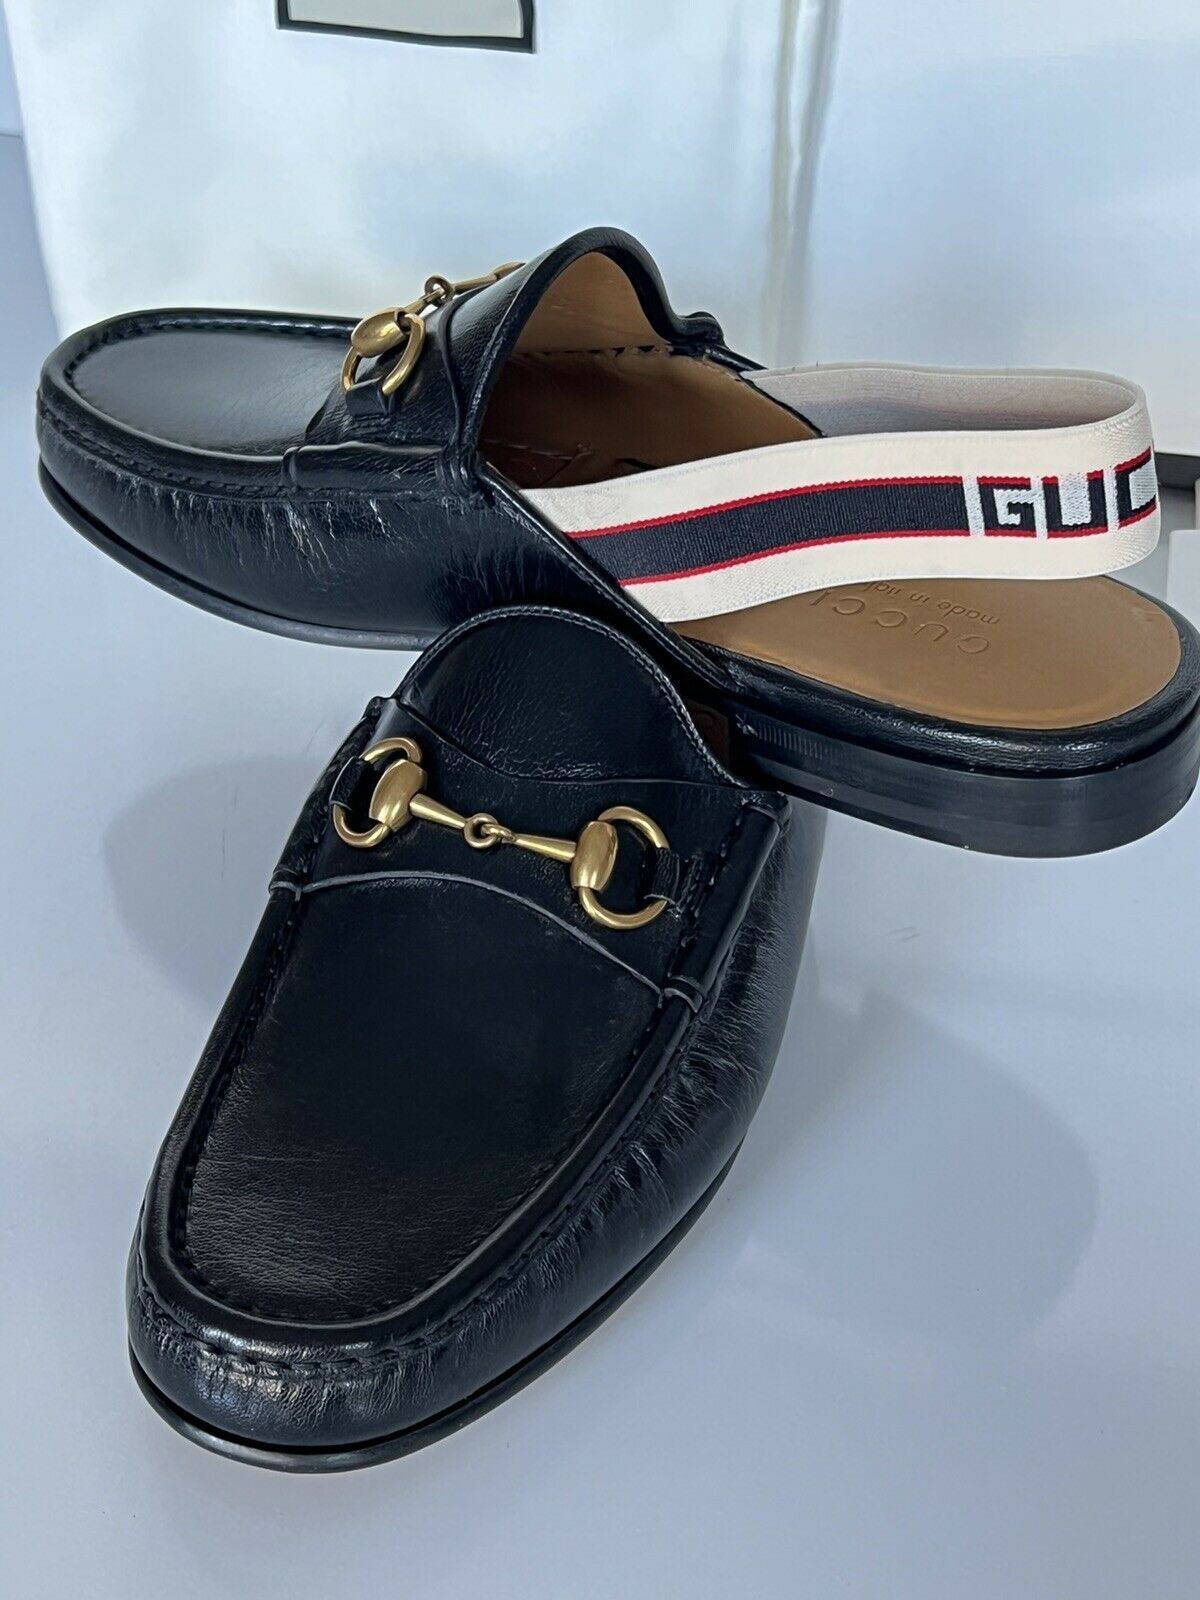 NIB Gucci Mens Horsebit Leather Slip On Black Sandals 8.5 US (Gucci 8) IT 523406